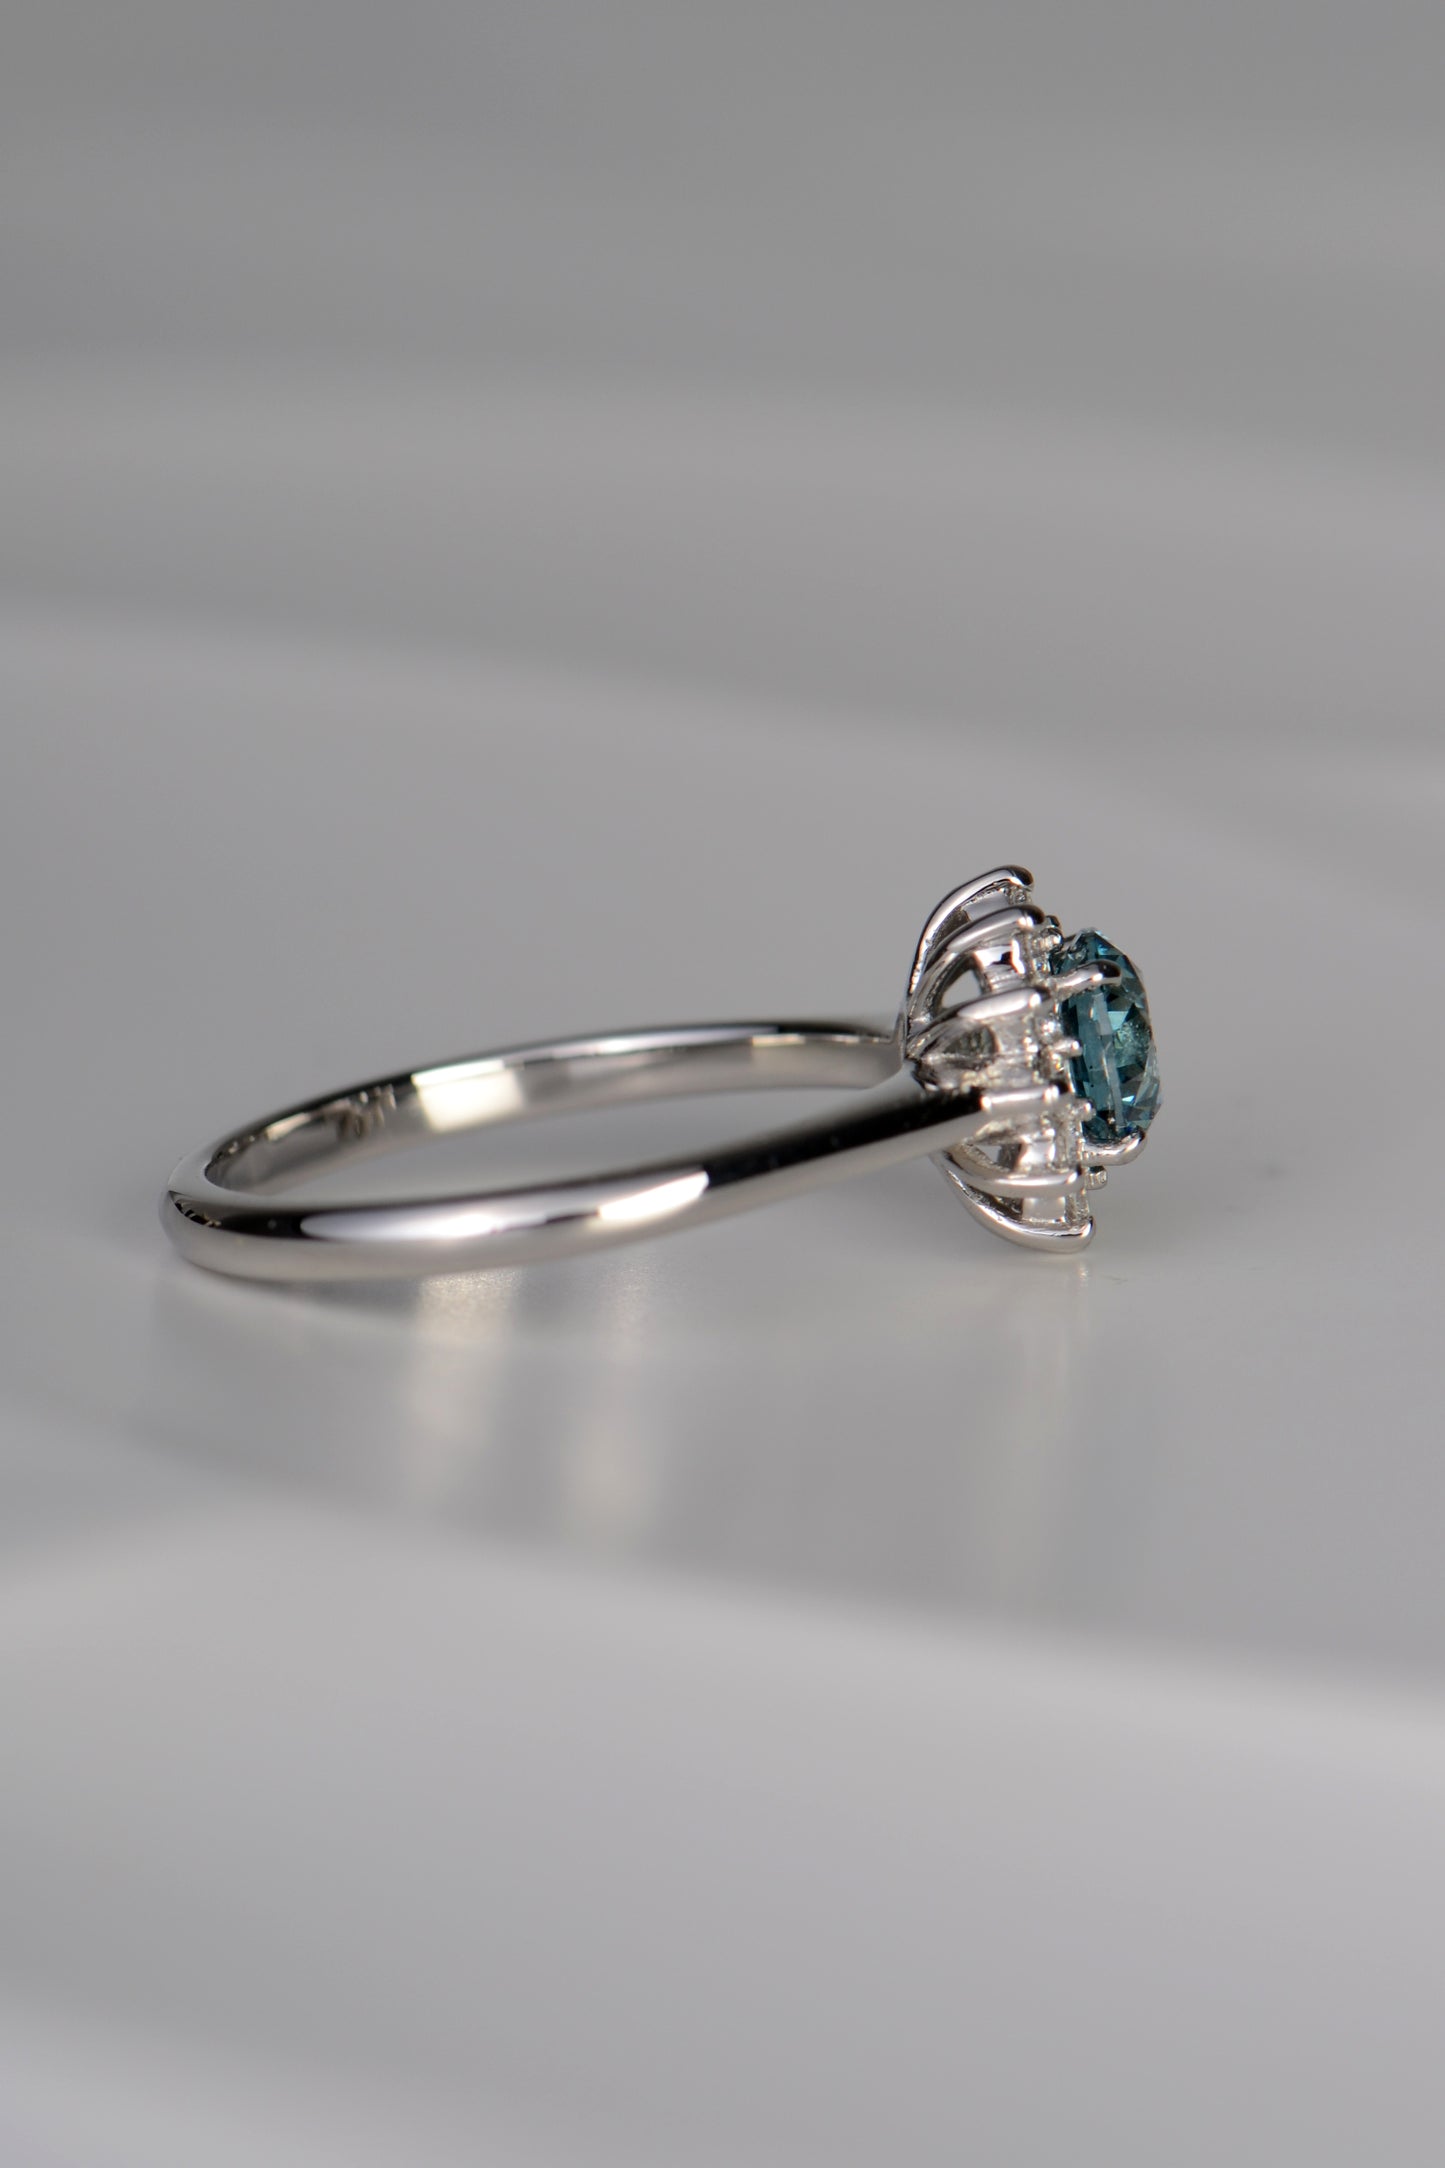 The Blue Diamond Flower Ring